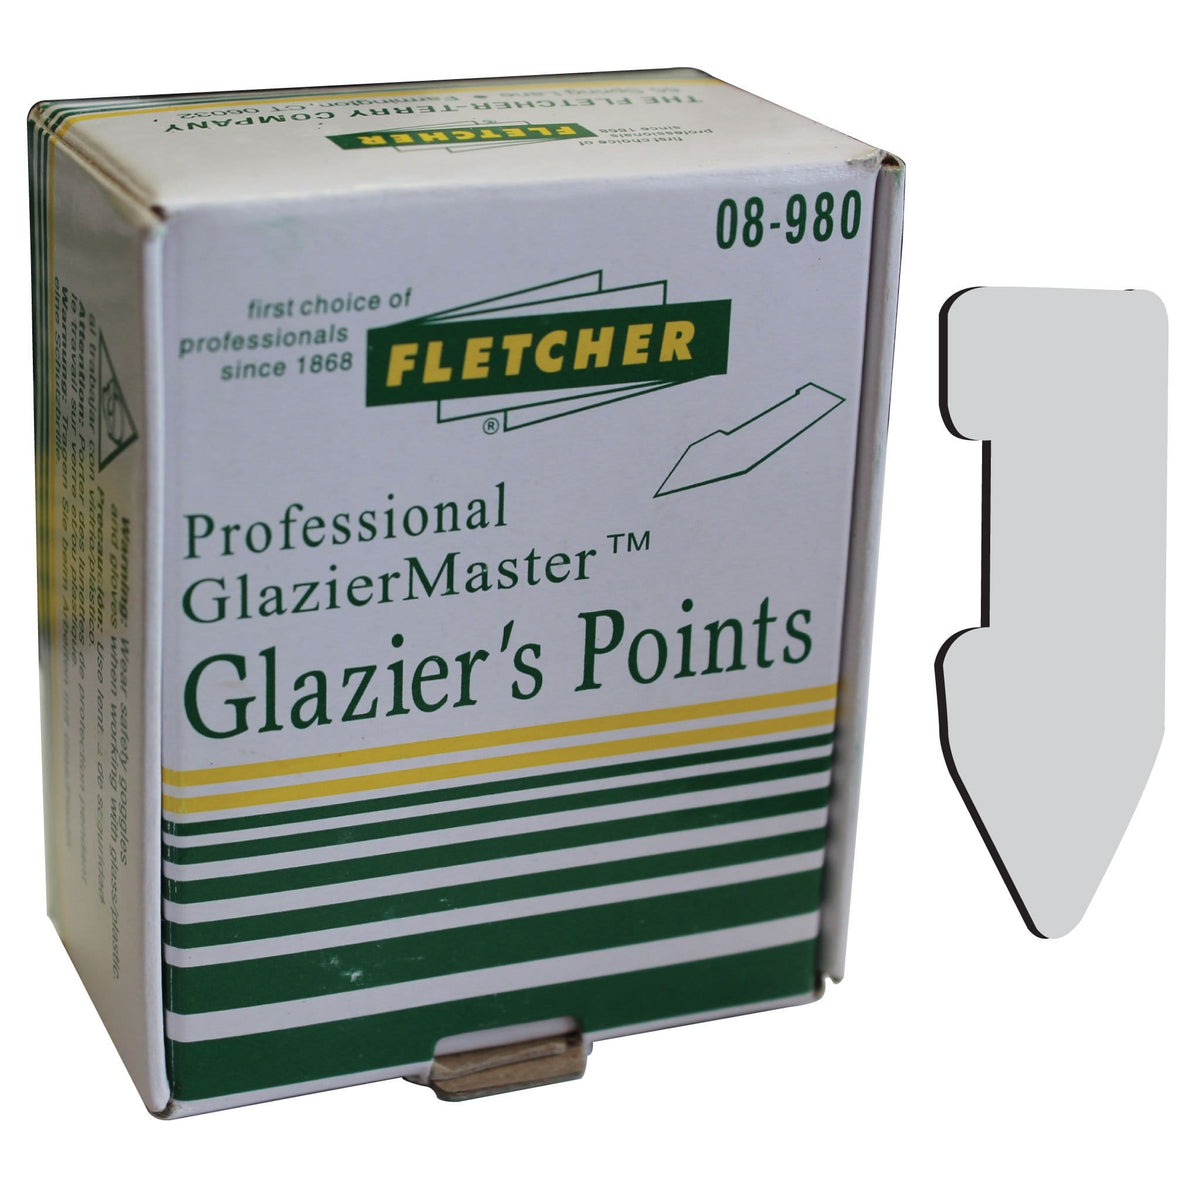 Fletcher Glazier's Points 08-980 8mm X 5000 for Framemaster Framing/glazing  -  Finland